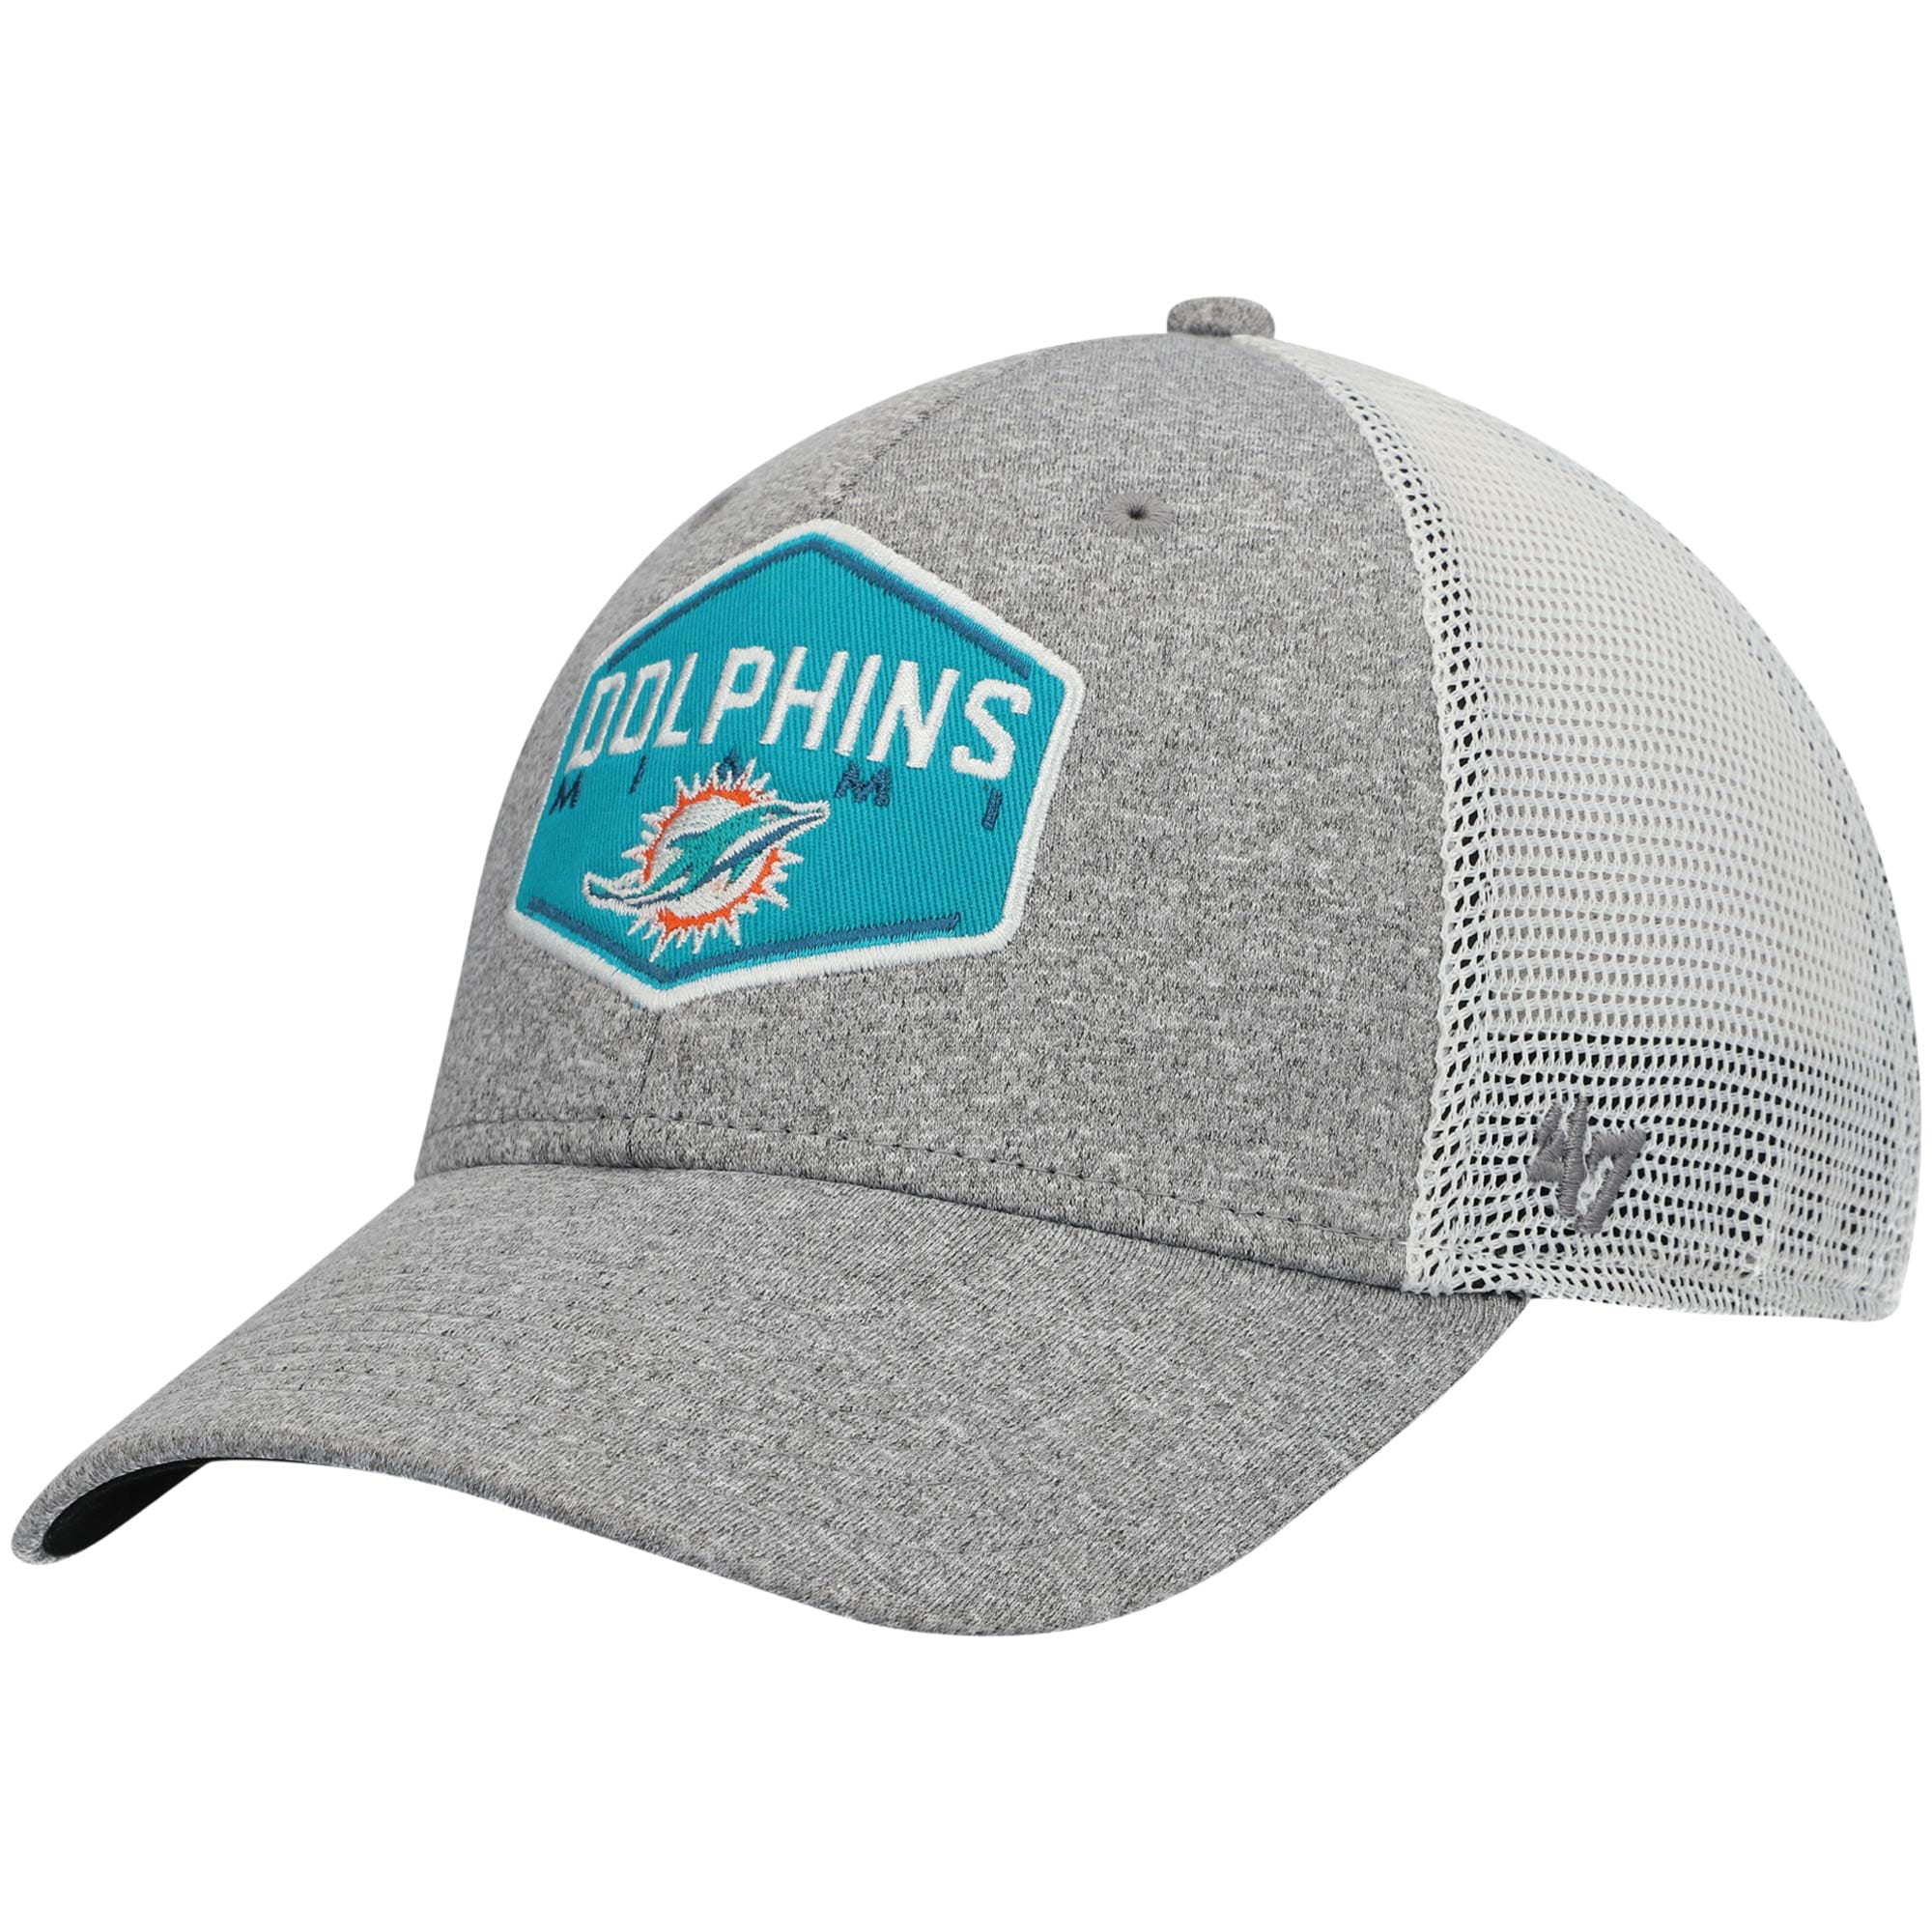 Baseball Cap Texture Flock Dolphins Under Water Adjustable Mesh Unisex Baseball Cap Trucker Hat Fits Men Women Hat 